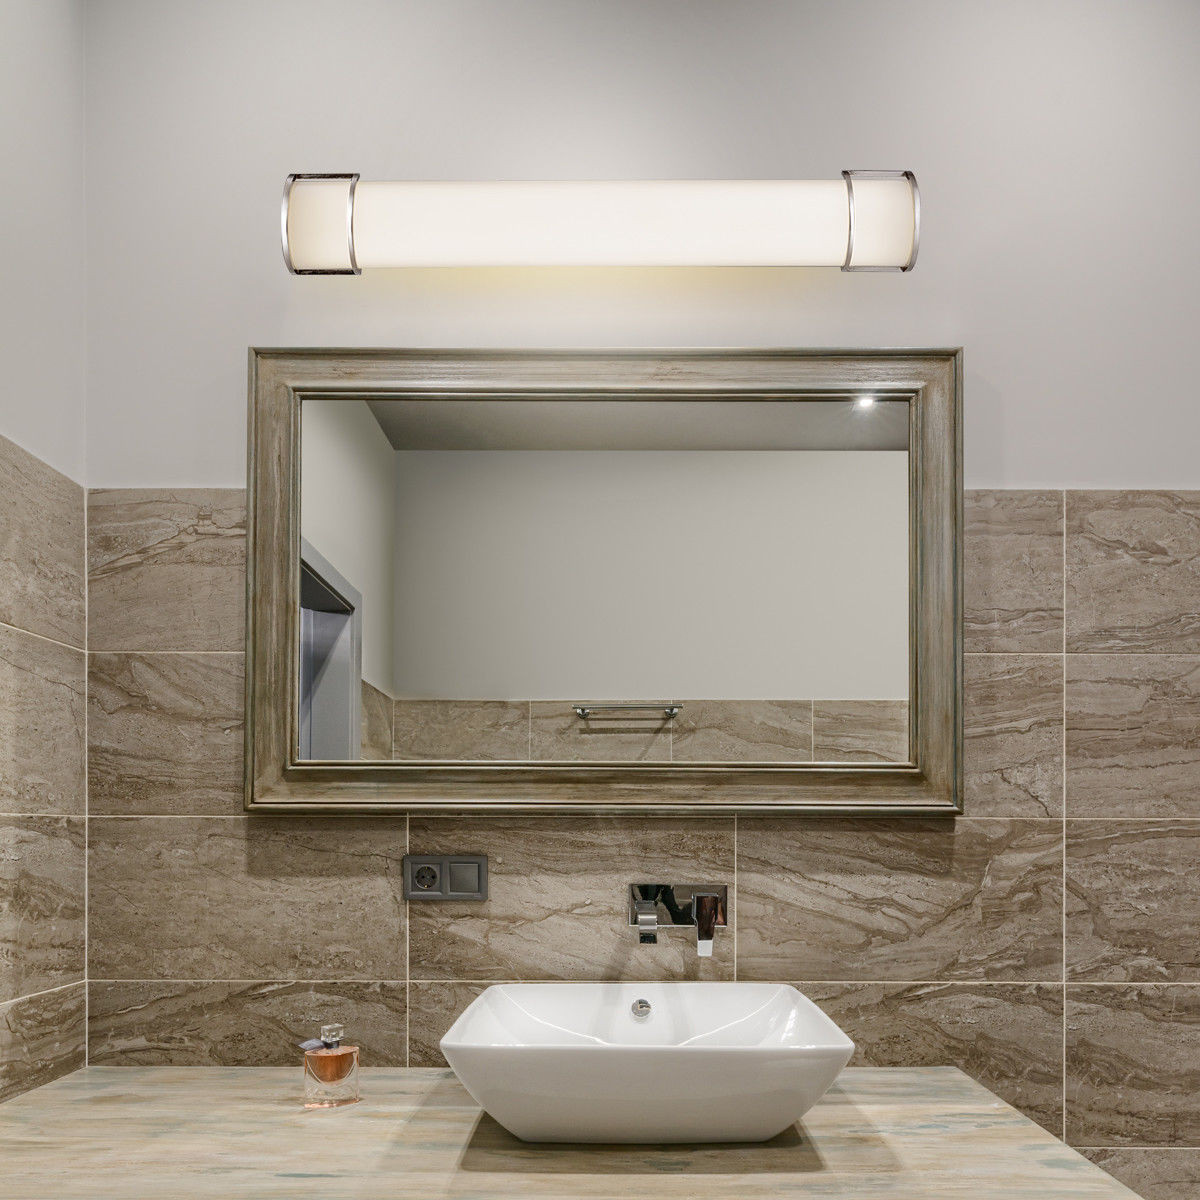 Led Bathroom Lighting
 Costway 36 25W Integrated LED Linear Vanity Light Bar